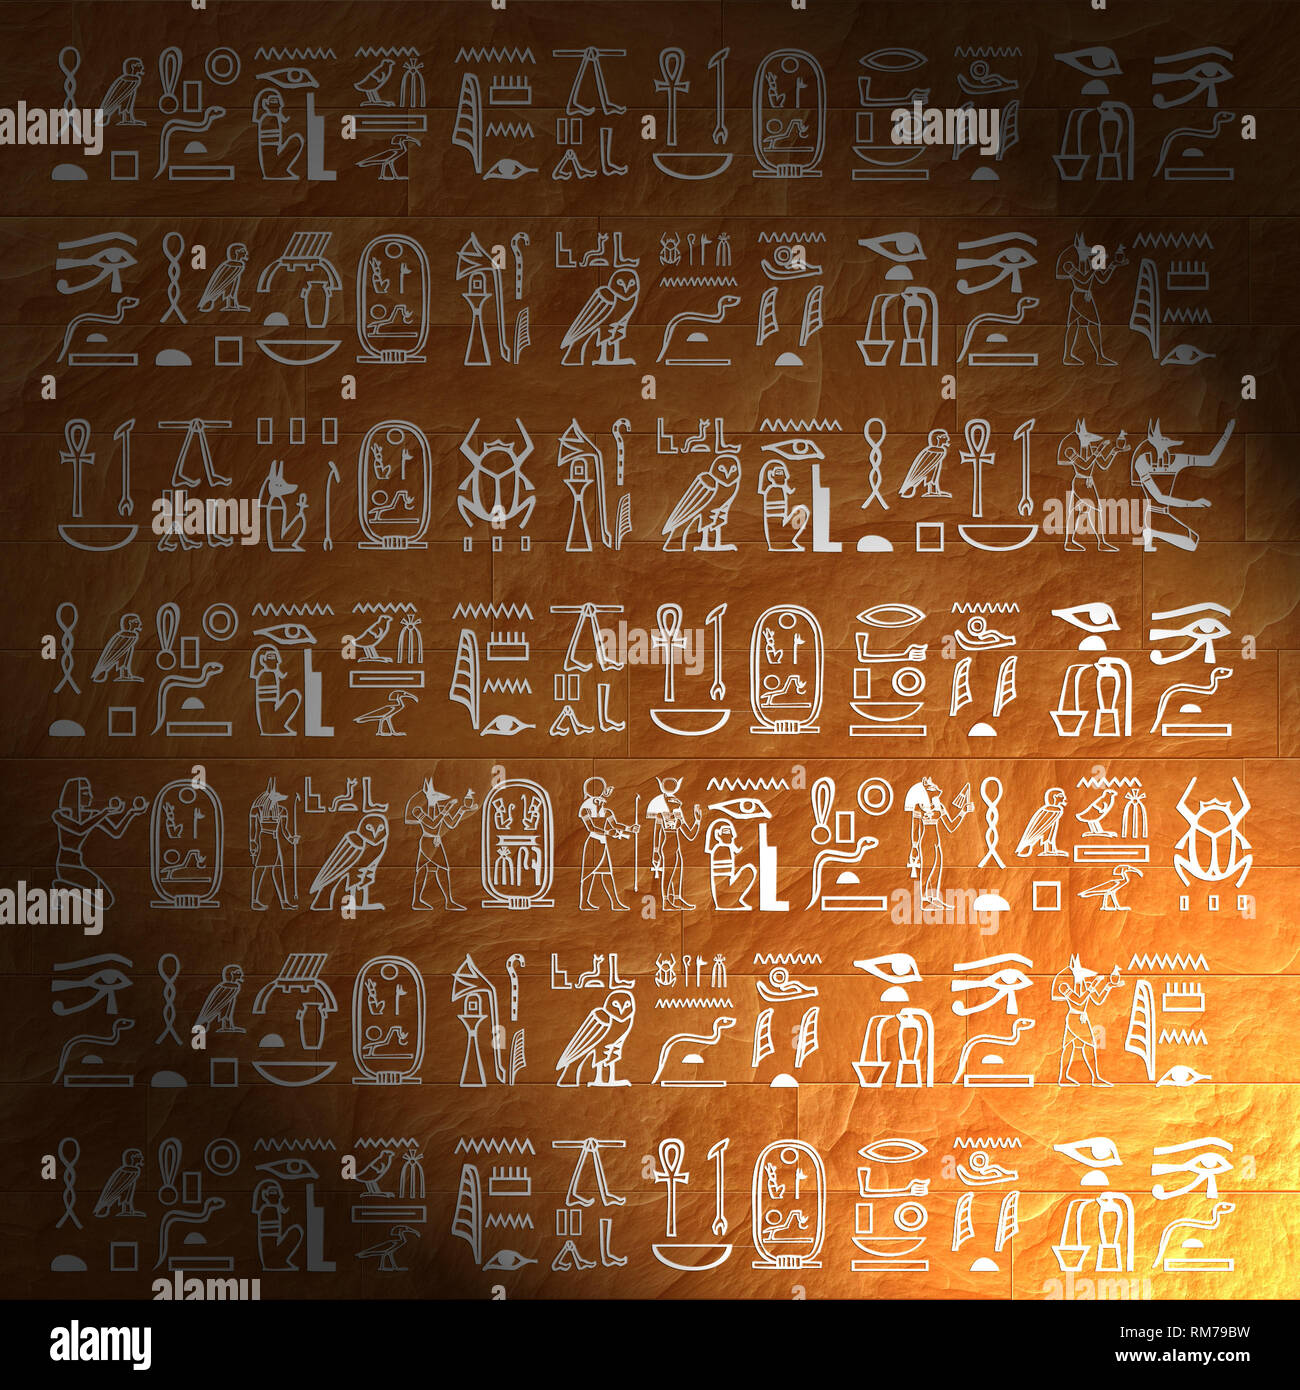 wall with ancient Egypt hieroglyphics Stock Photo